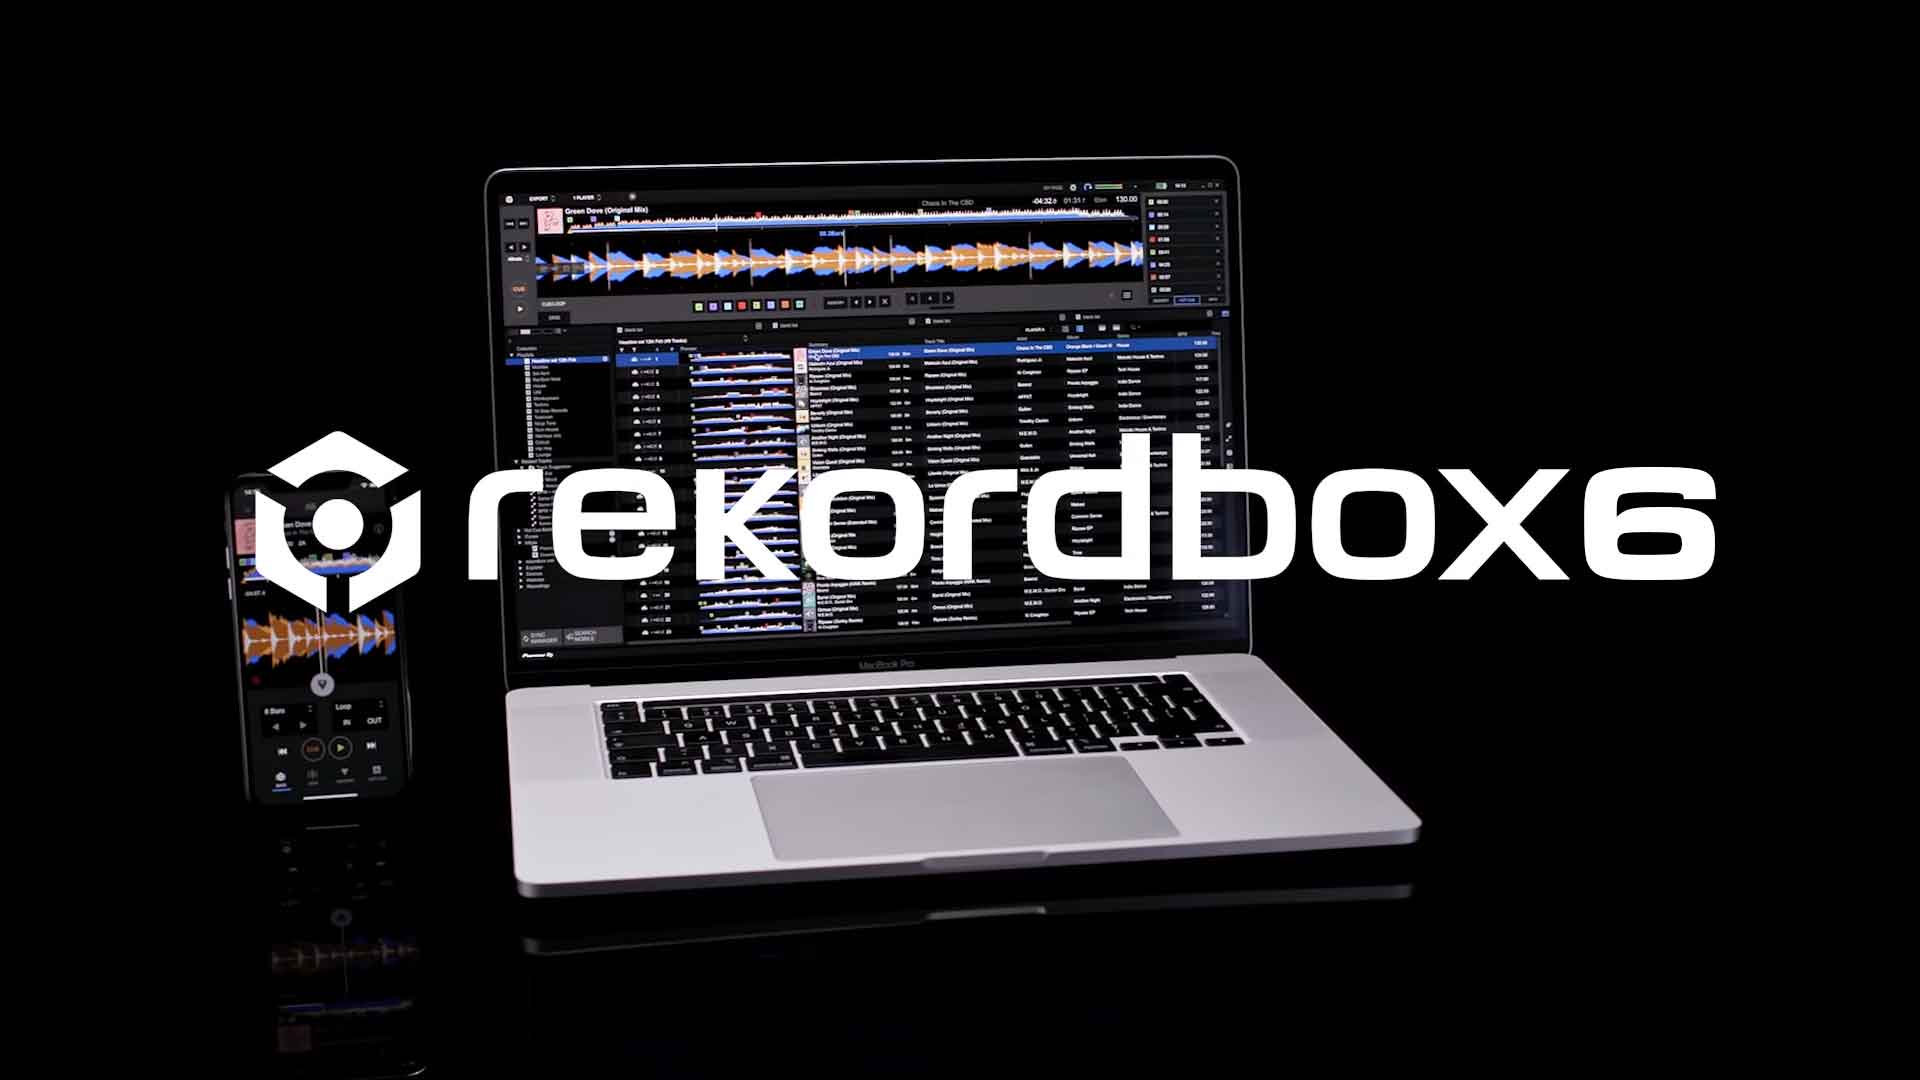 download sampler for rekordbox